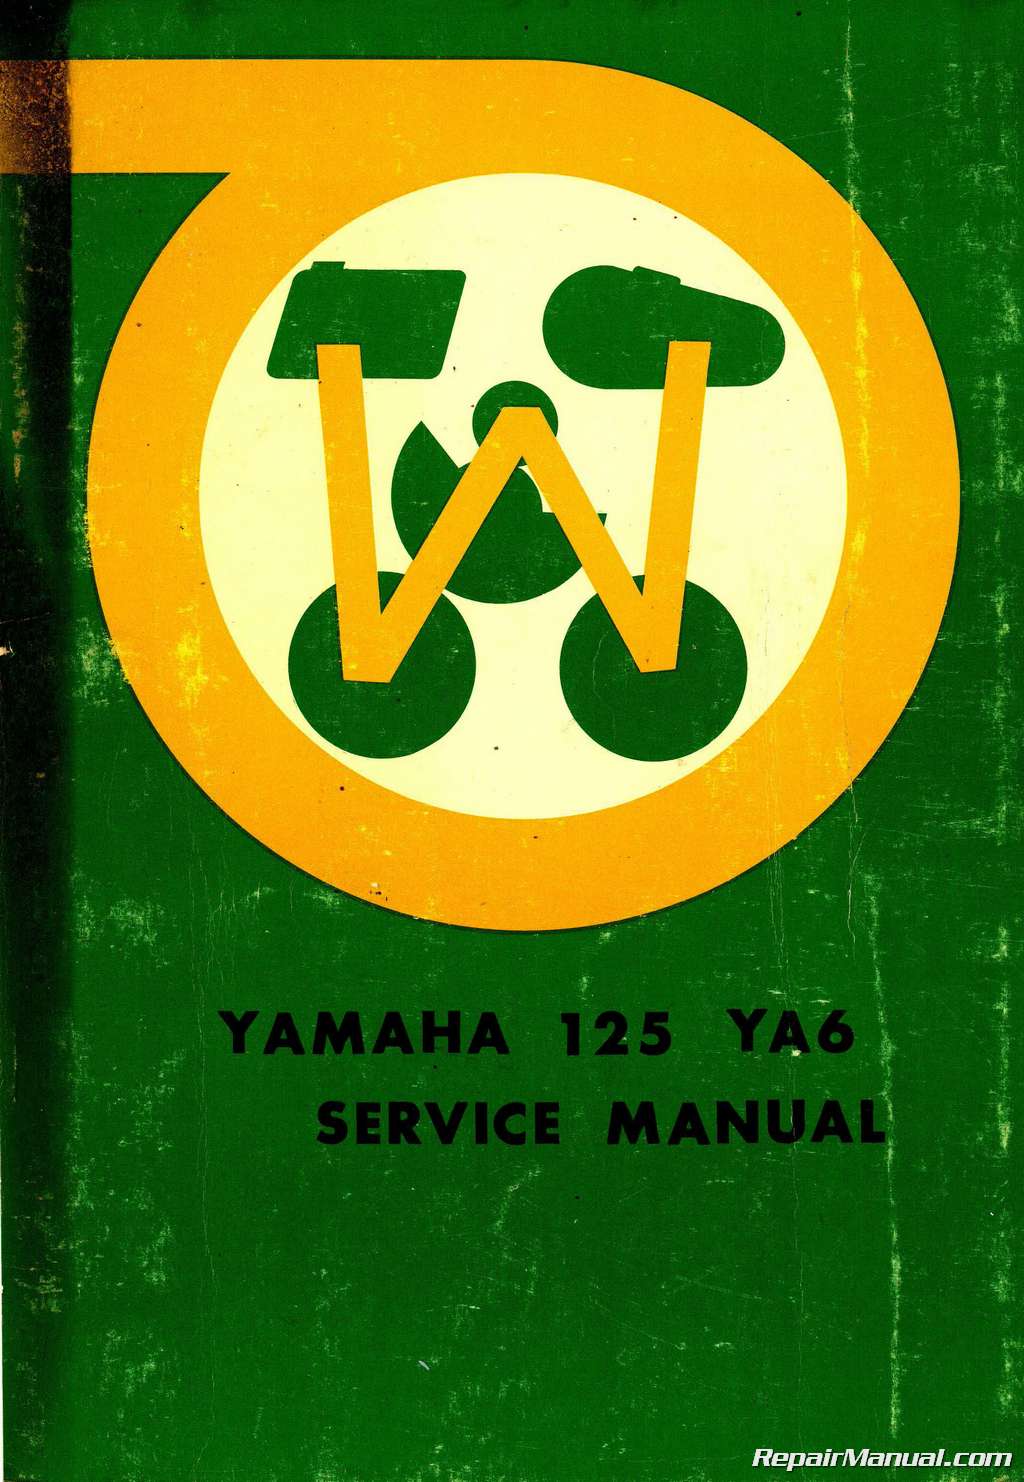 YAMAHA GENUINE PARTS MANUAL REPRINT 1966 YA6 